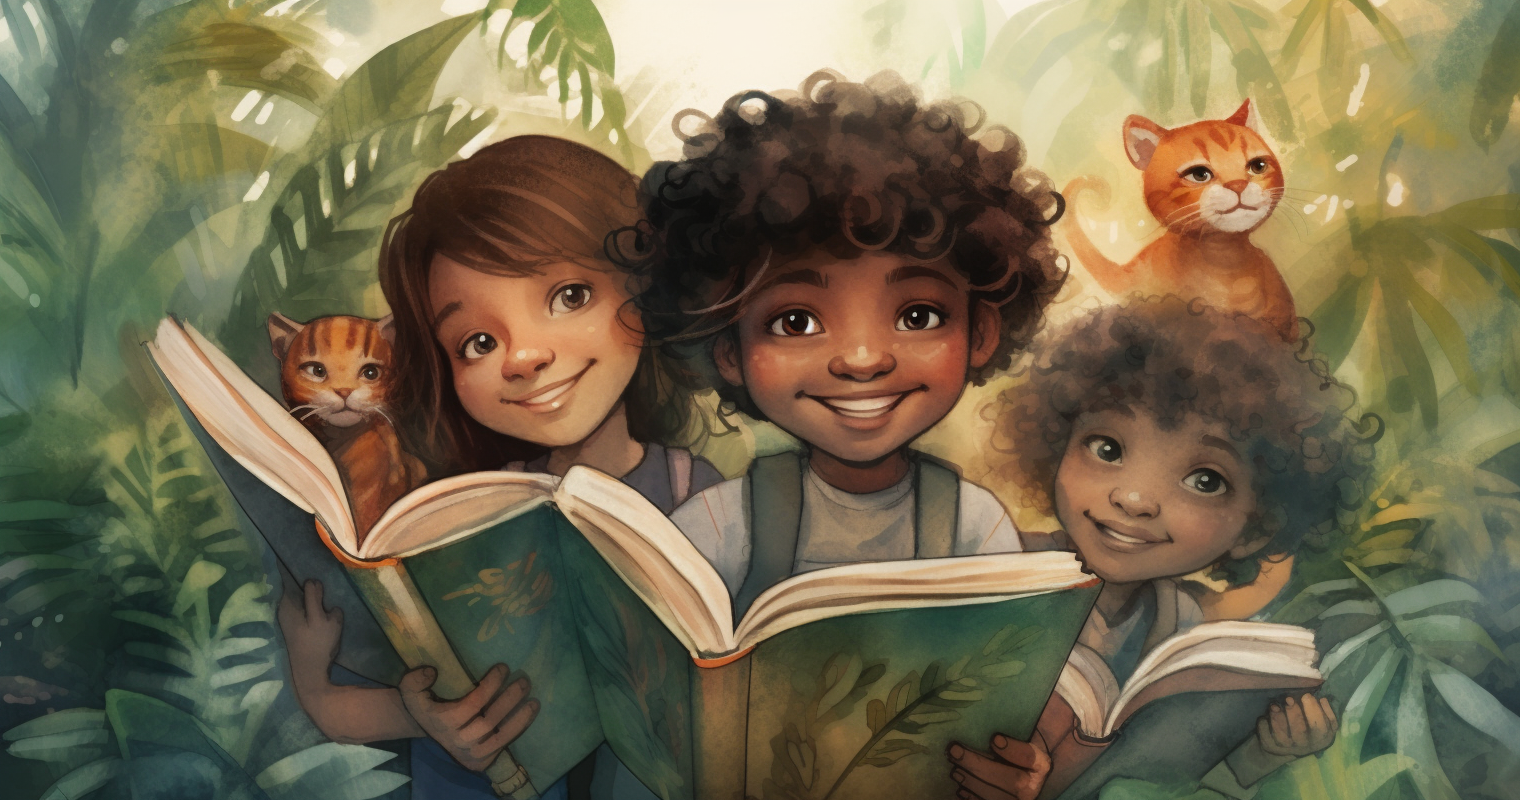 libros para ninos para leer, cuentos para leer gratis, libros infantiles para leer en ingles, libros para leer a bebes gratis